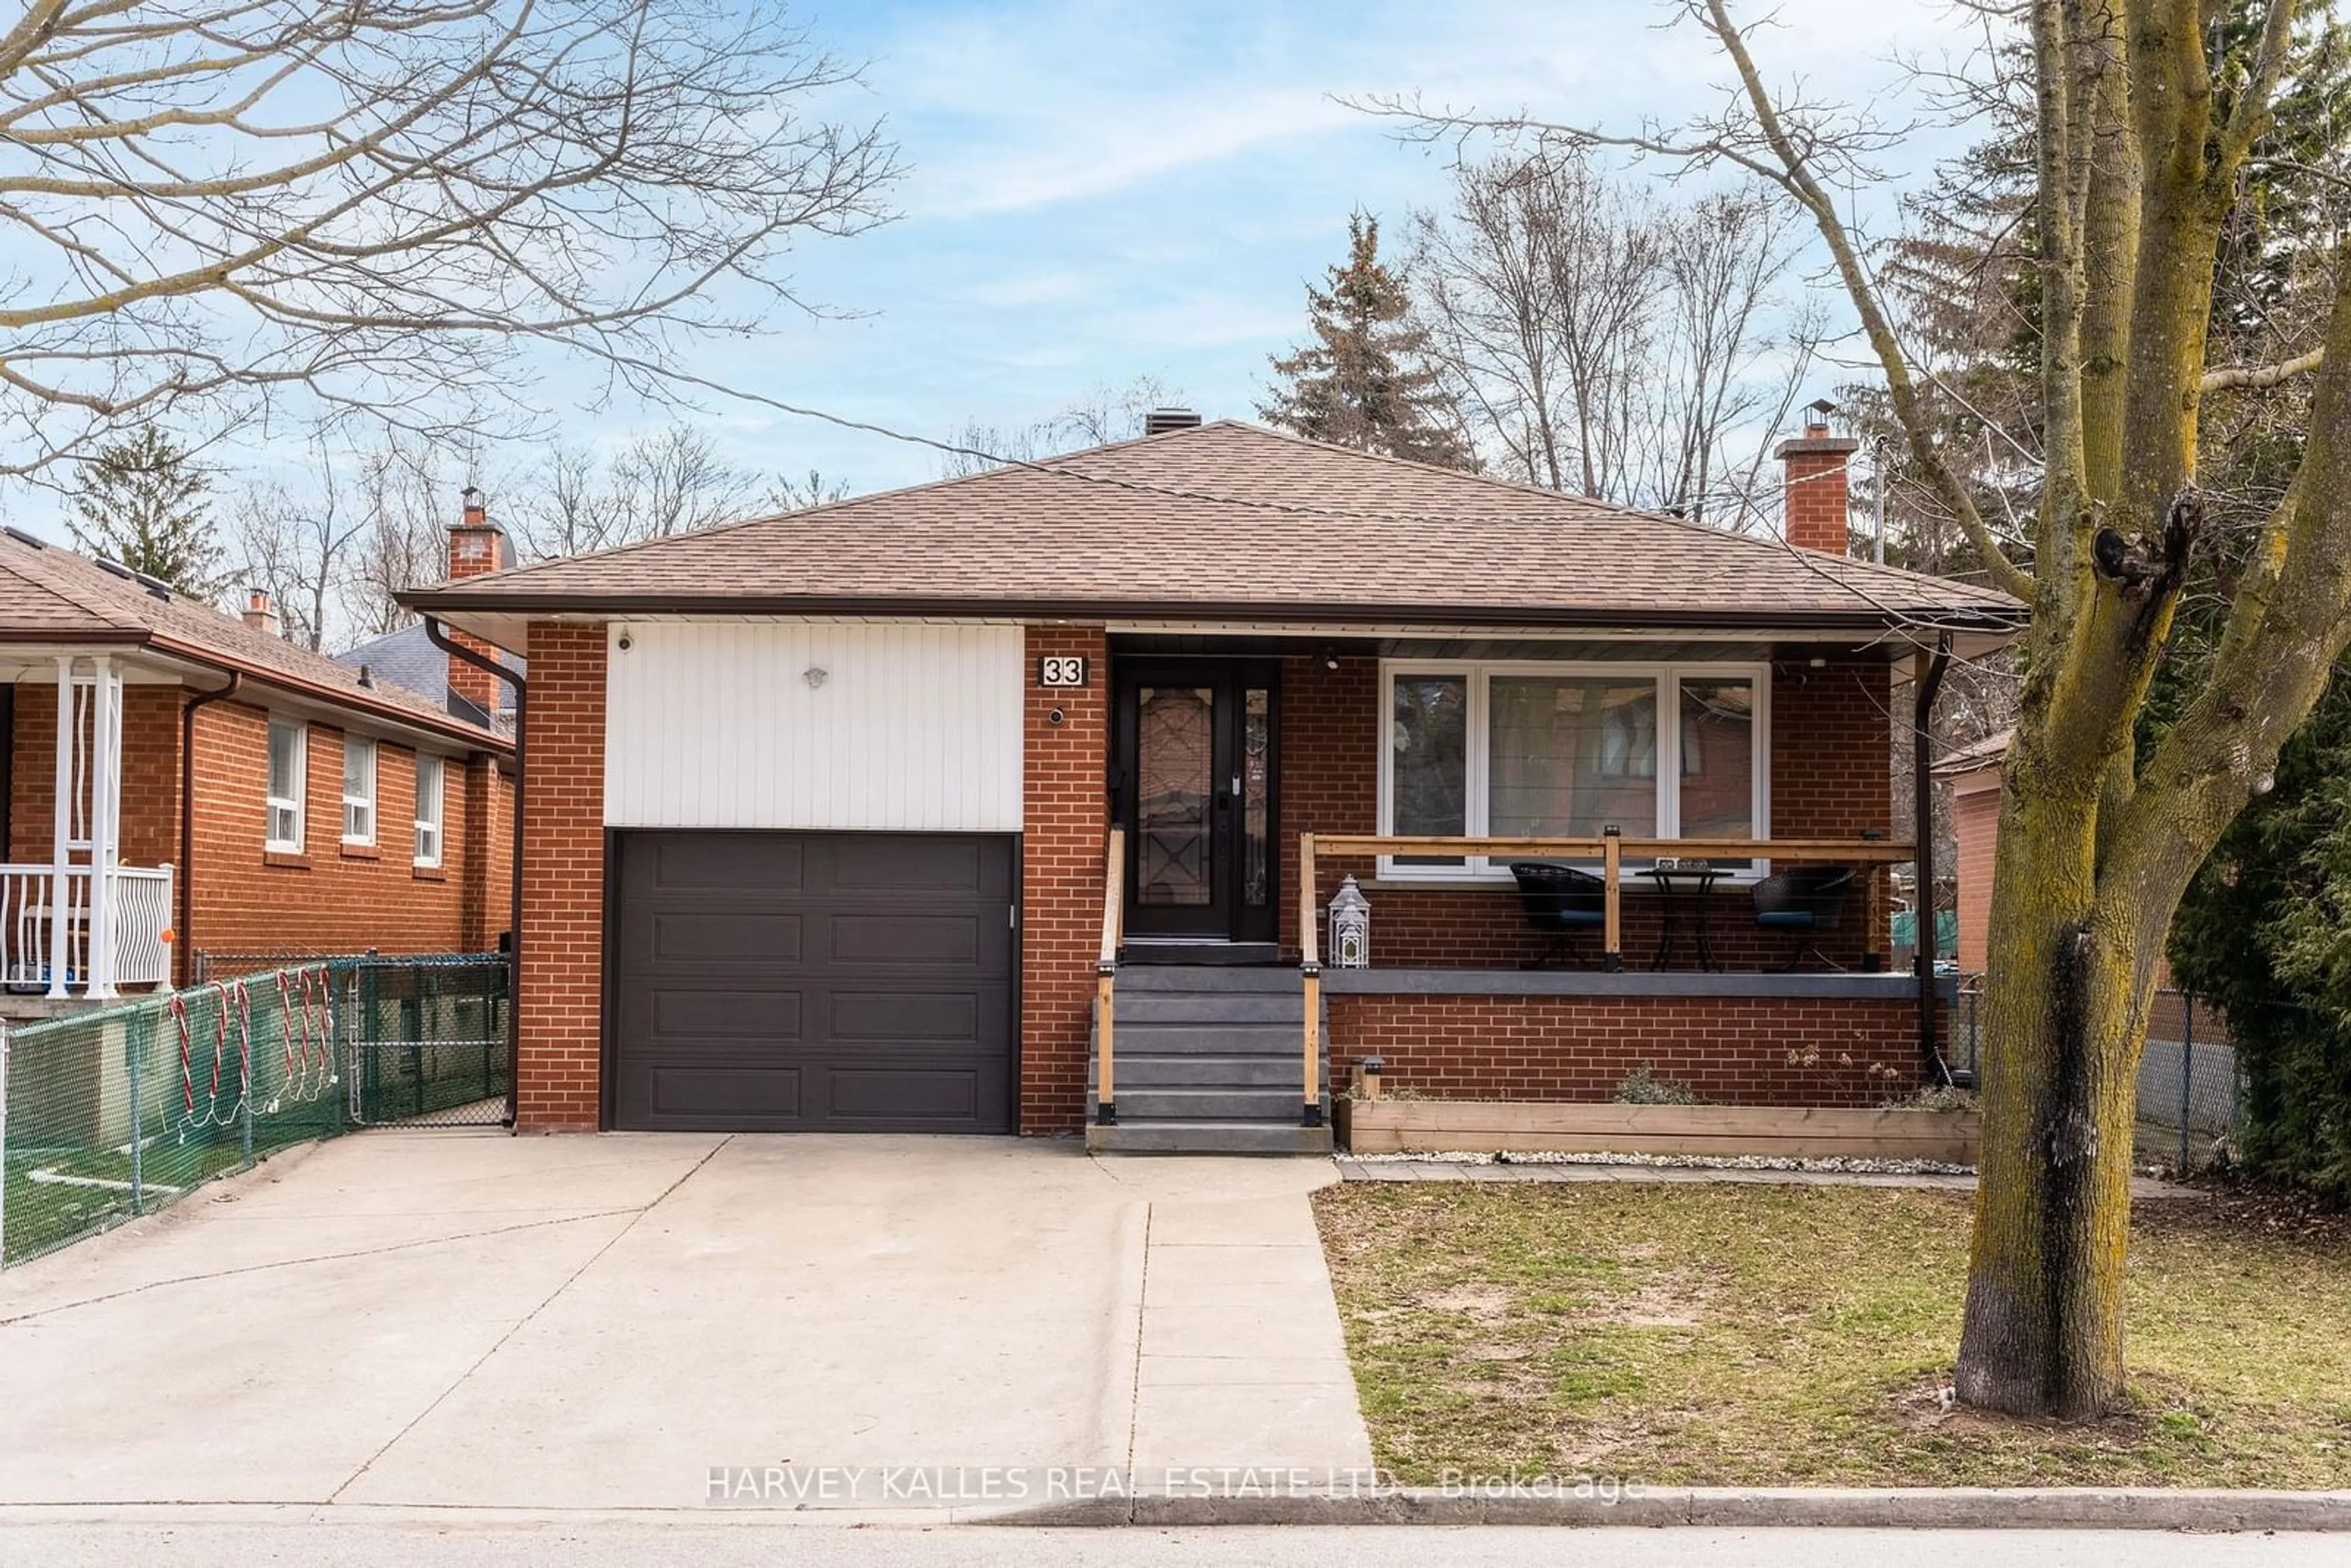 Home with brick exterior material for 33 Madawaska Ave, Toronto Ontario M2M 2R1